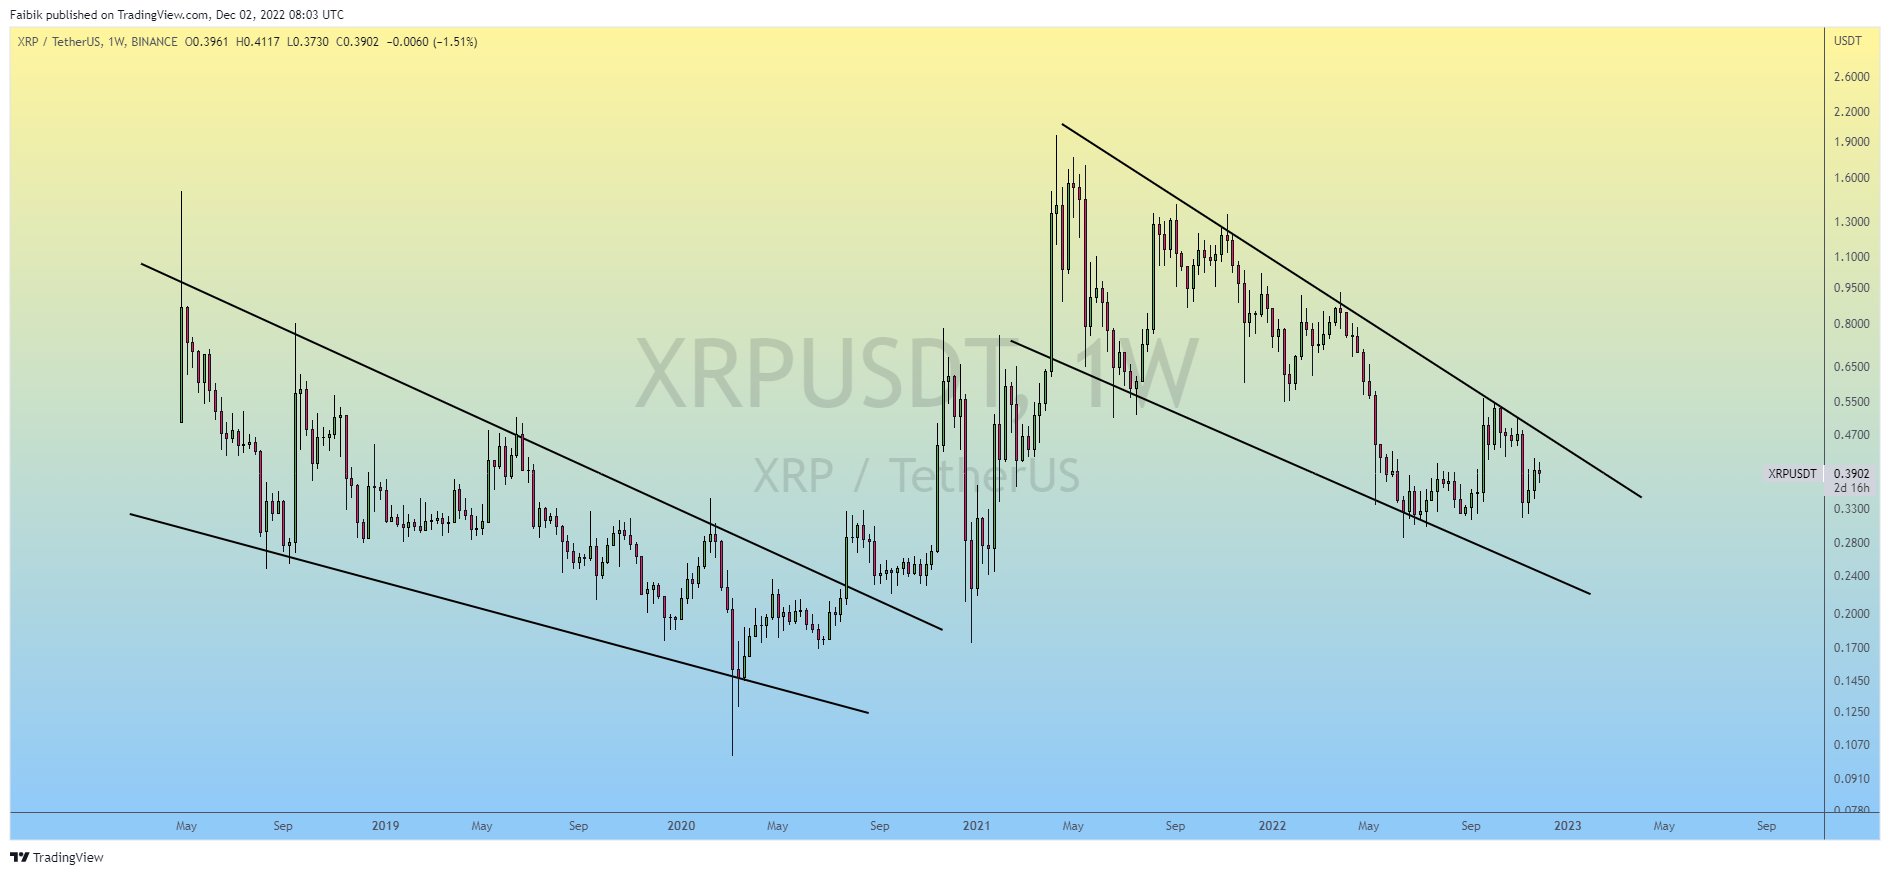 XRP/USDT price chart